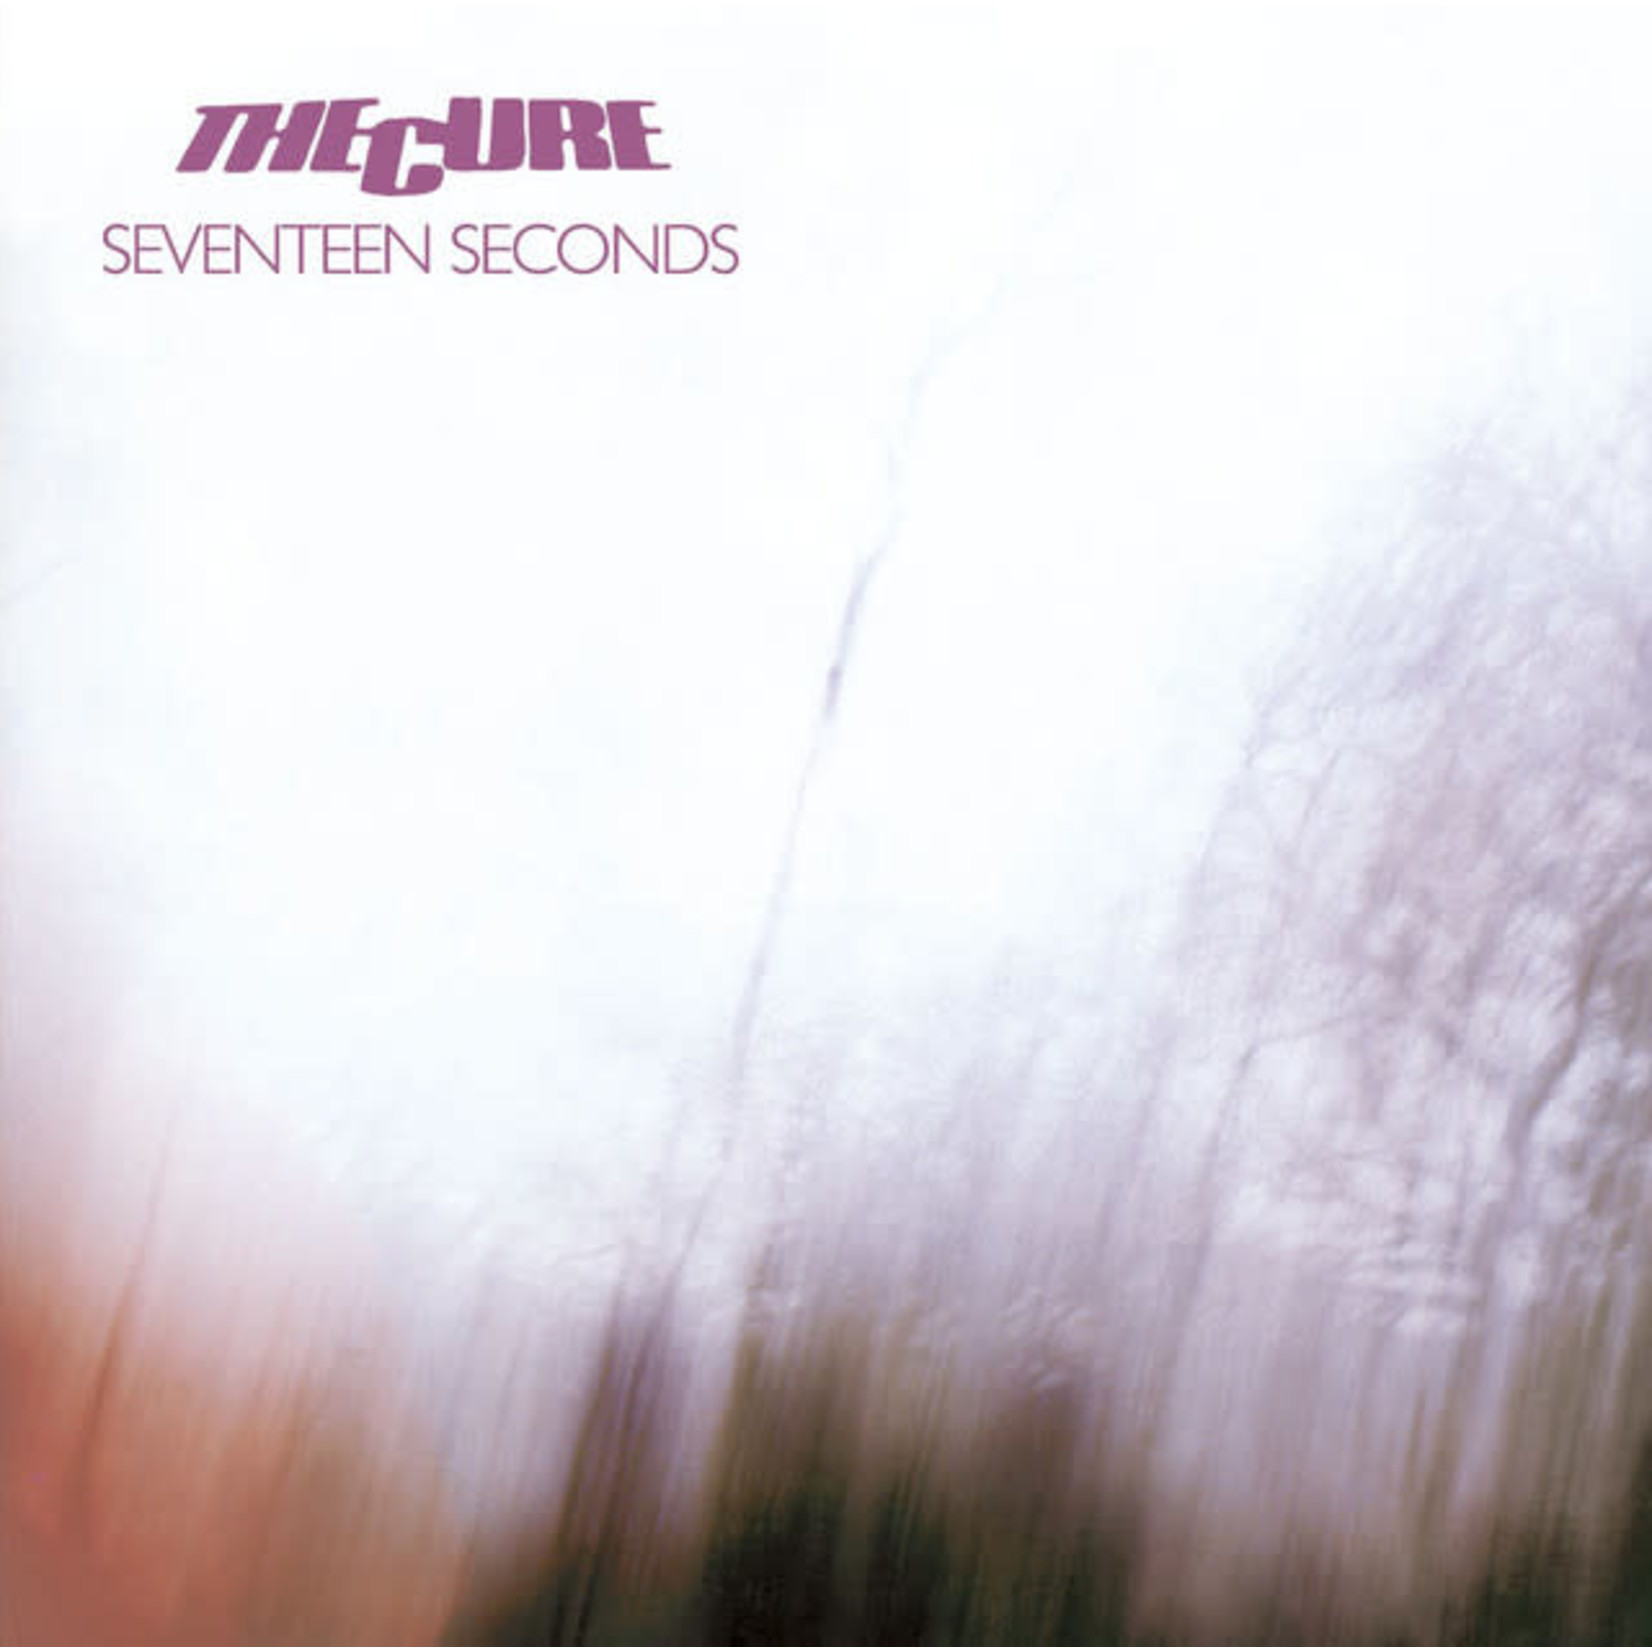 Vinyl The Cure - Seventeen Seconds (US Import)